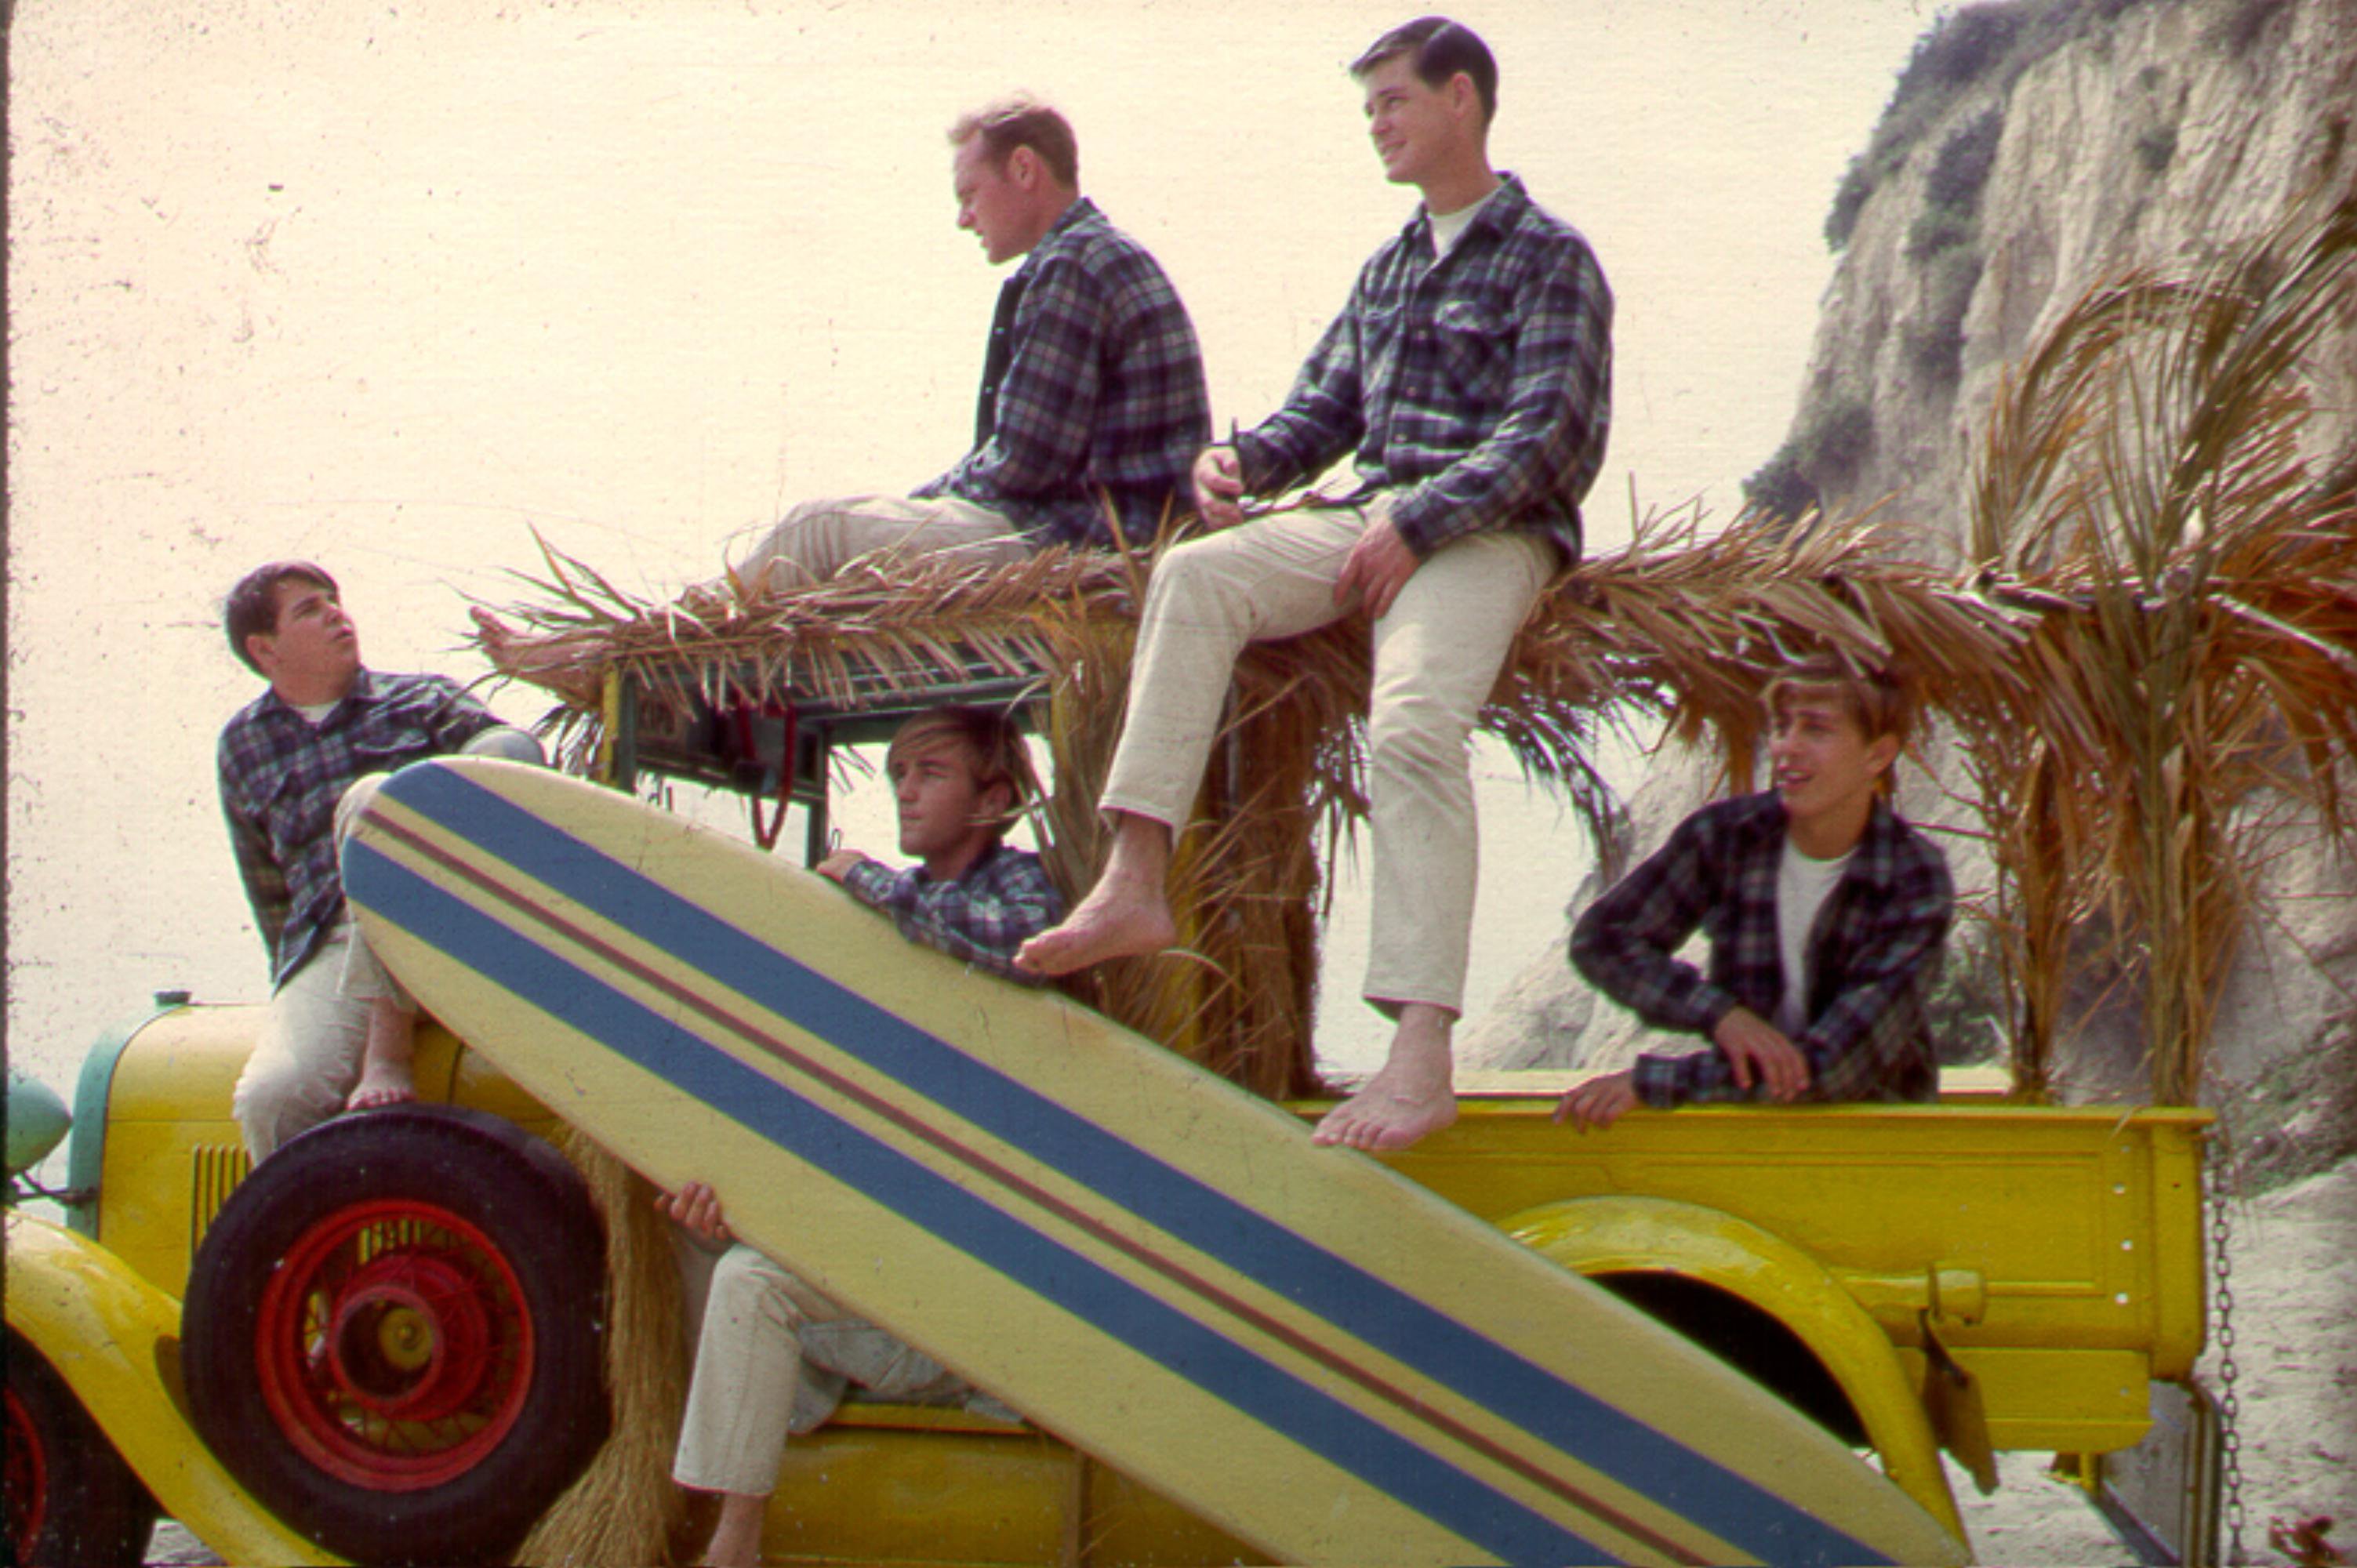 The Beach Boys sitting on a truck at a beach